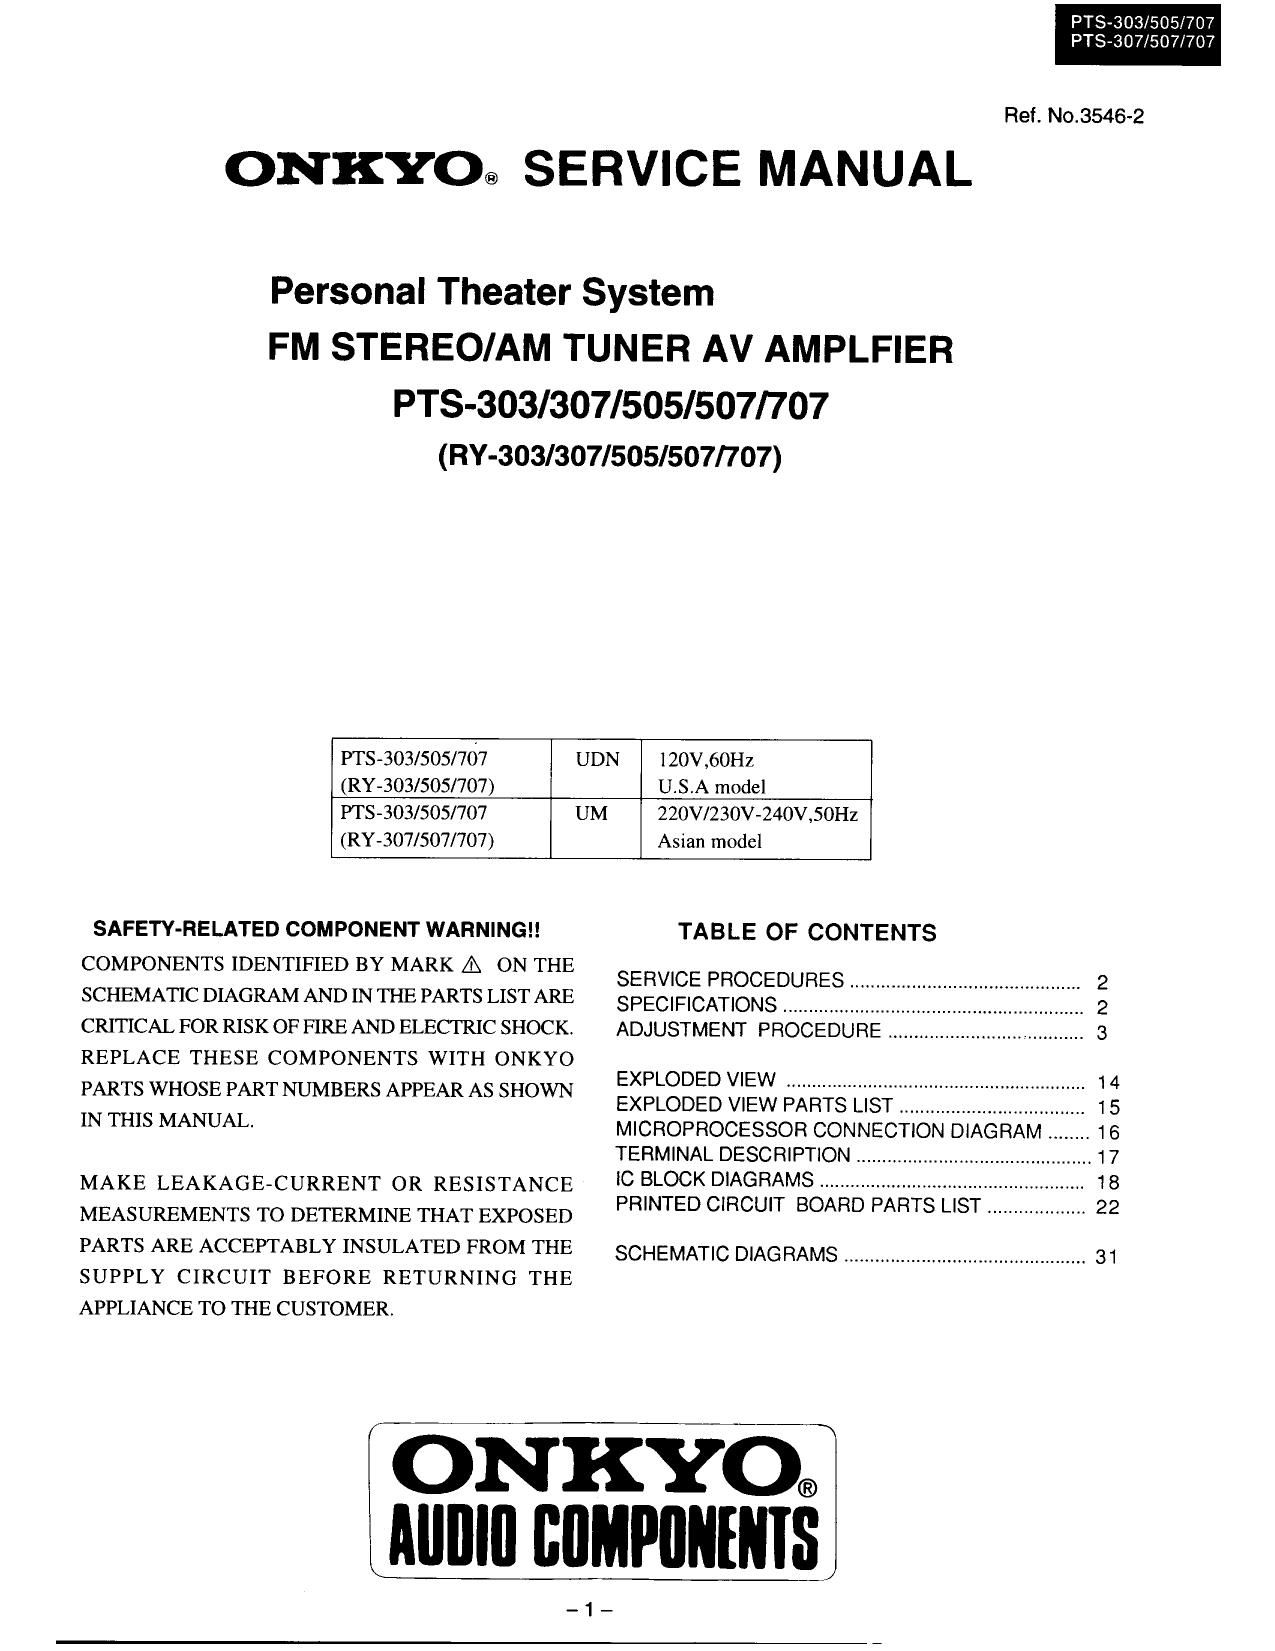 Onkyo PTS 707 Service Manual